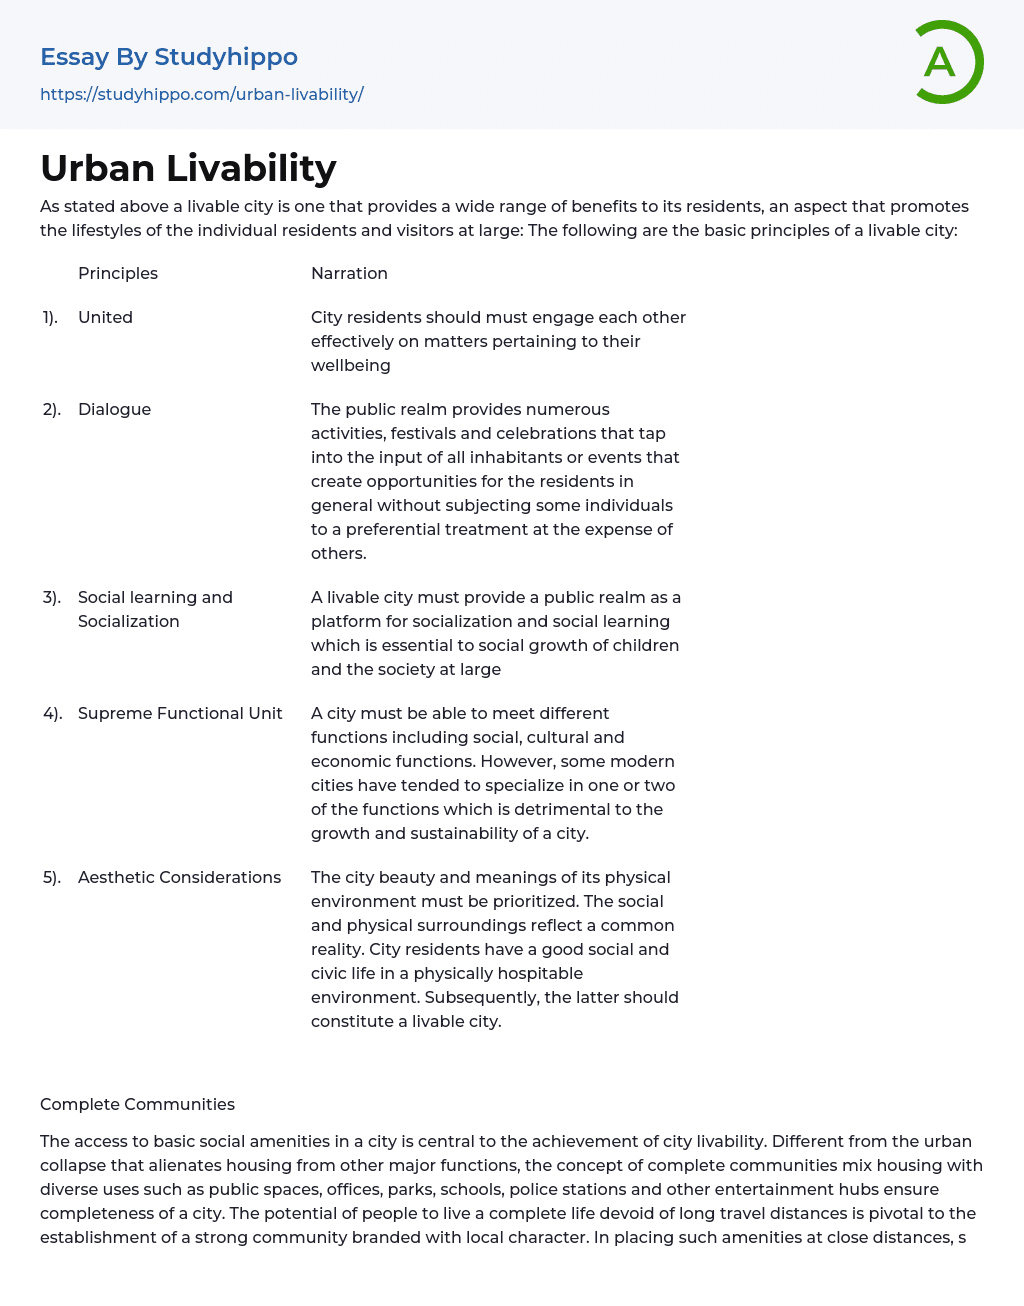 Urban Livability Essay Example